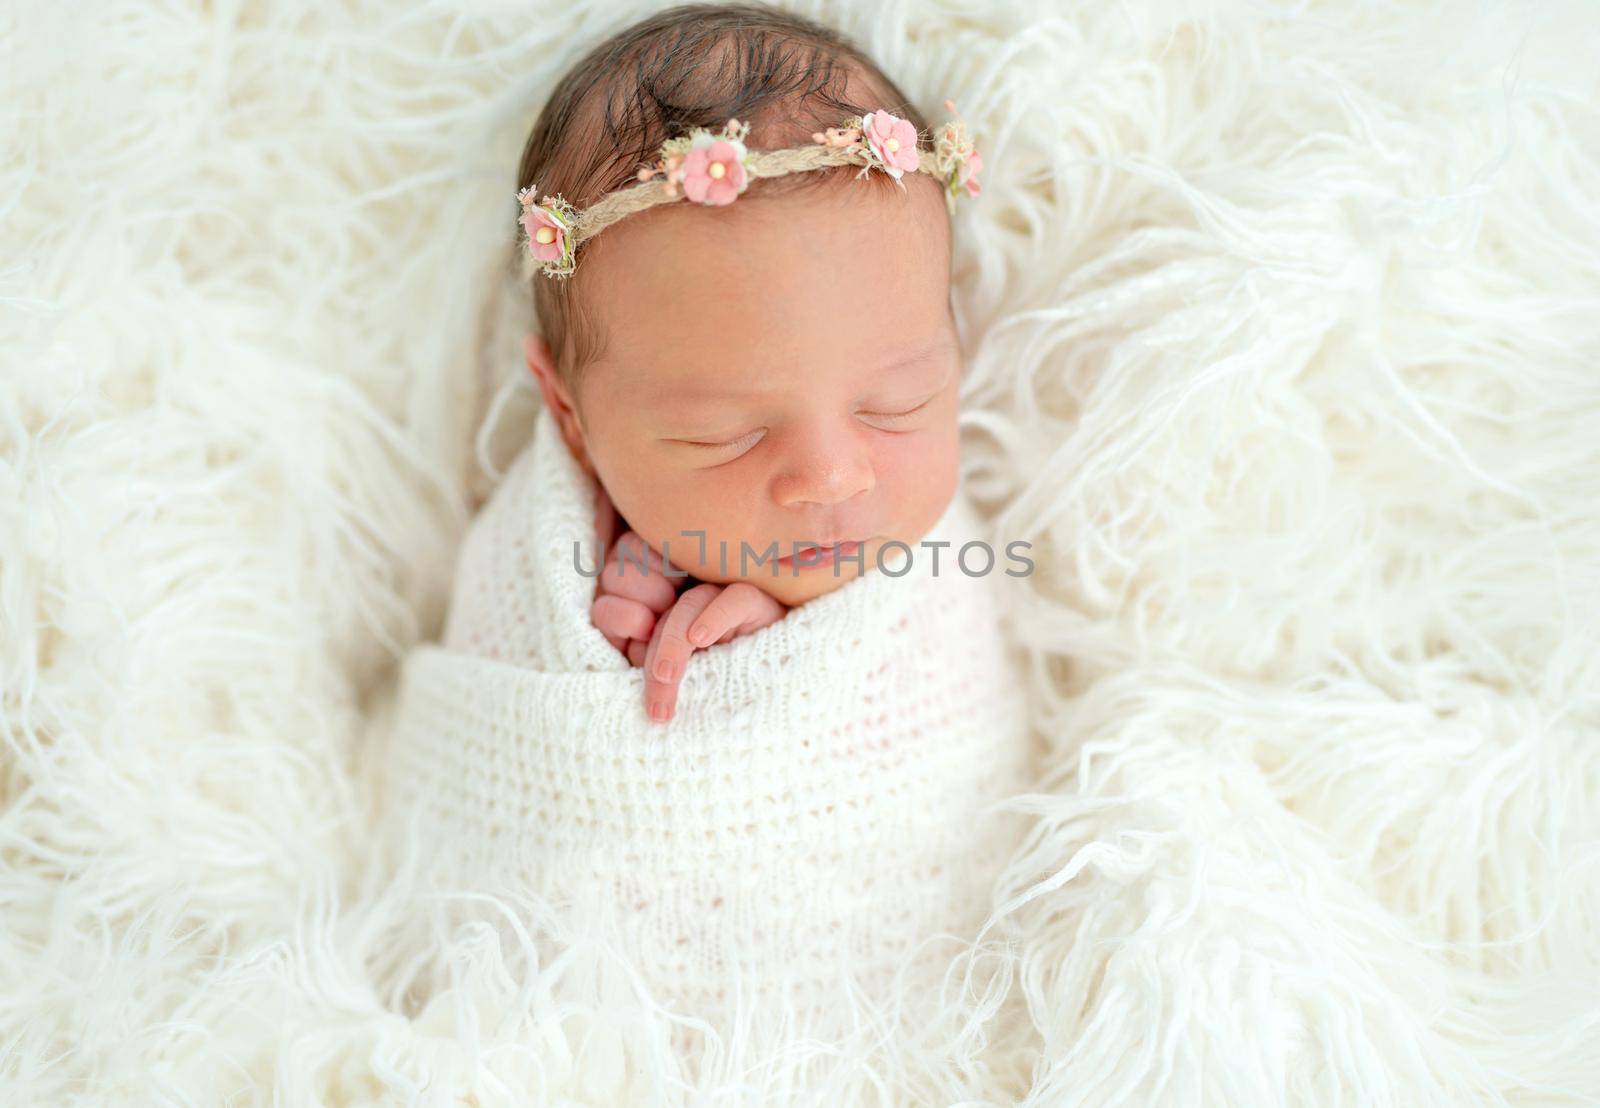 newborn baby girl sleeping sweetly in the basket